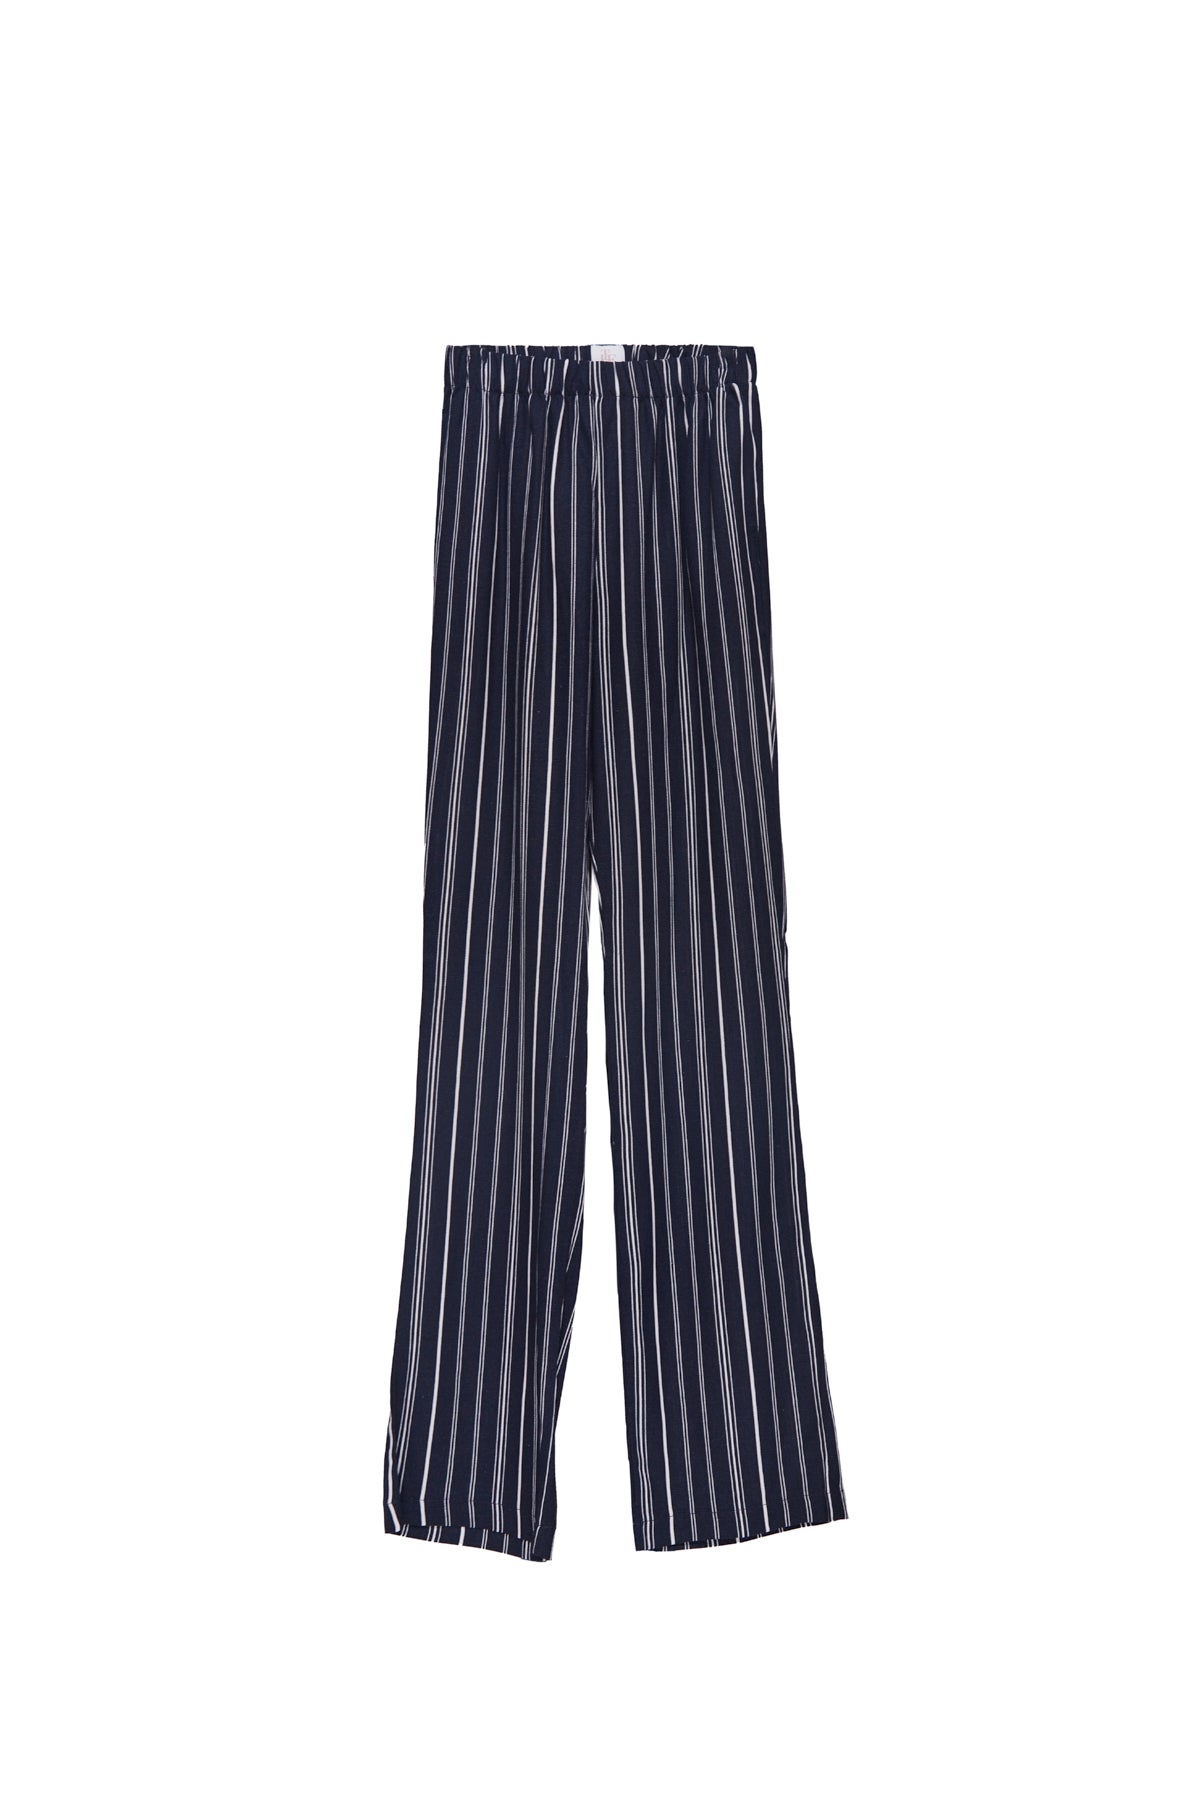 Tessa Navy Striped Cotton Pants